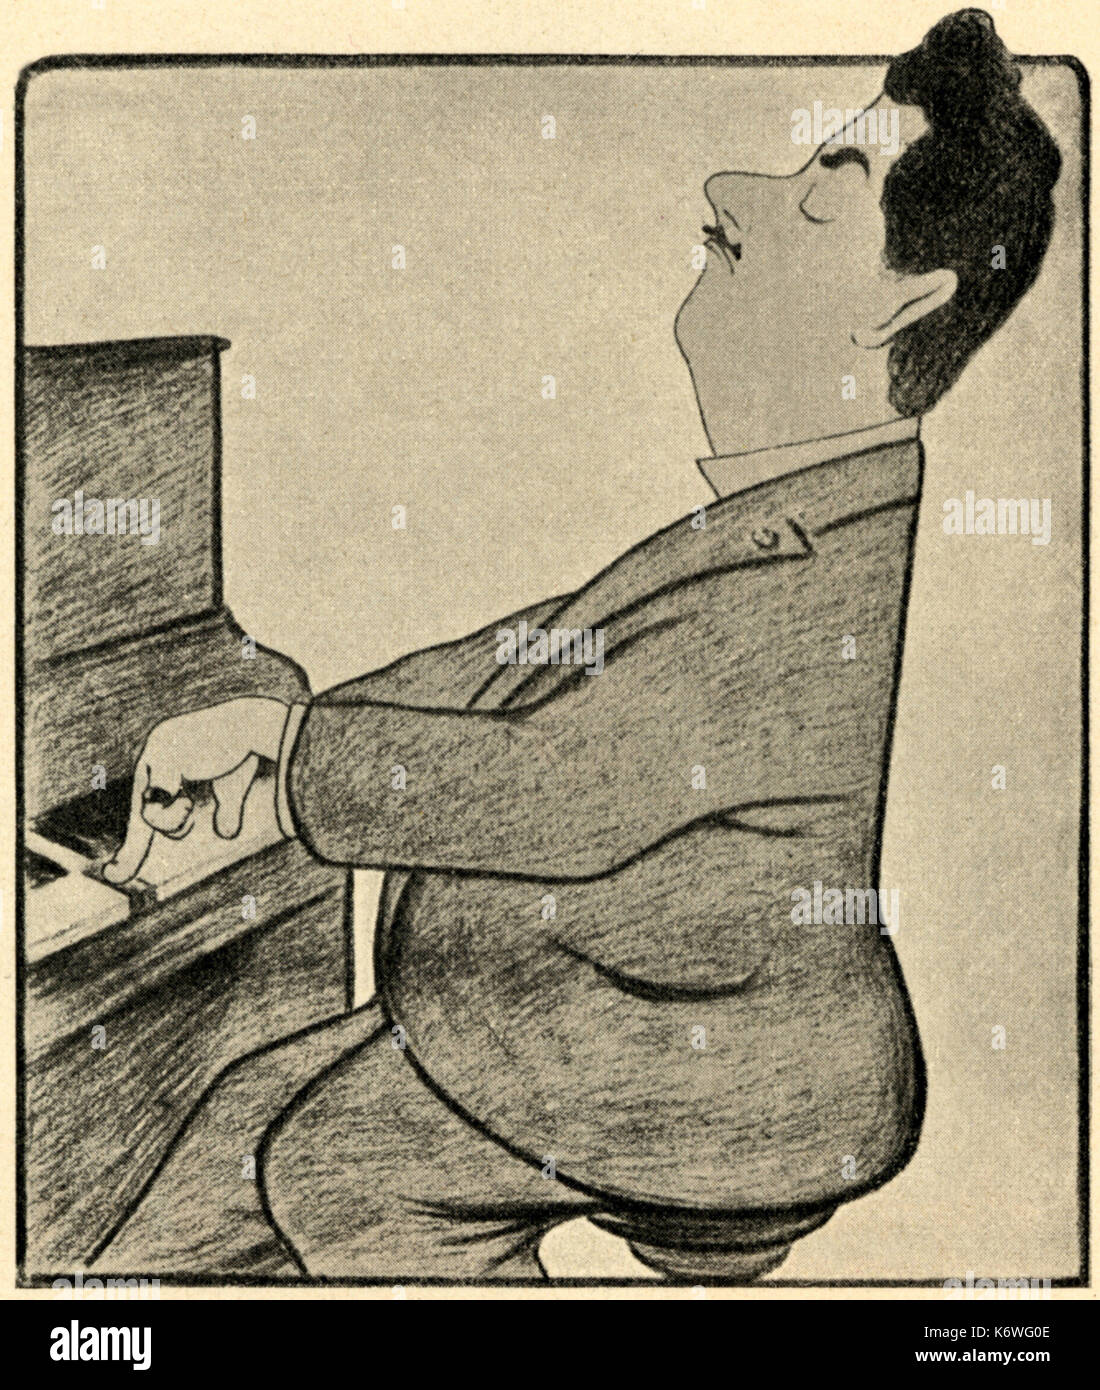 Puccini am Klavier, Karikatur von Leonetto Cappiello (9. April 1875 - 2. Februar 1942). Italienischer Komponist, 1858-1924. Stockfoto